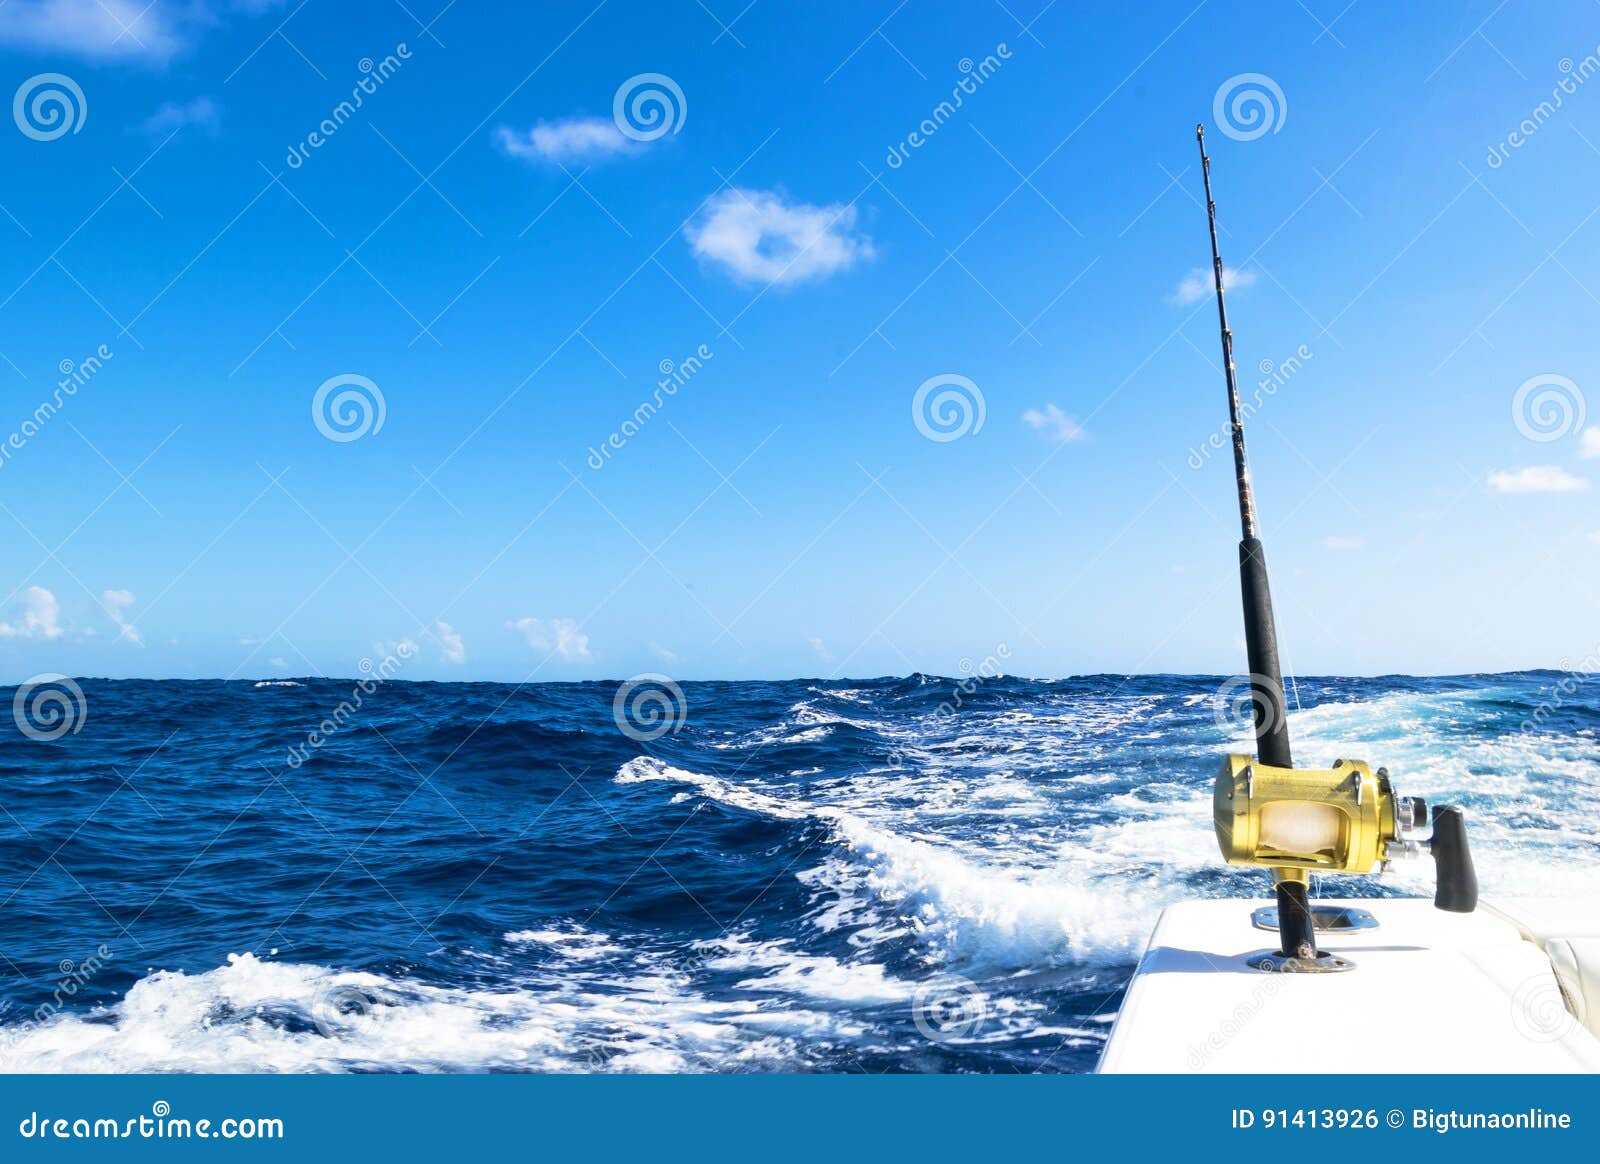 https://thumbs.dreamstime.com/z/fishing-rod-saltwater-boat-fishery-day-blue-ocean-91413926.jpg